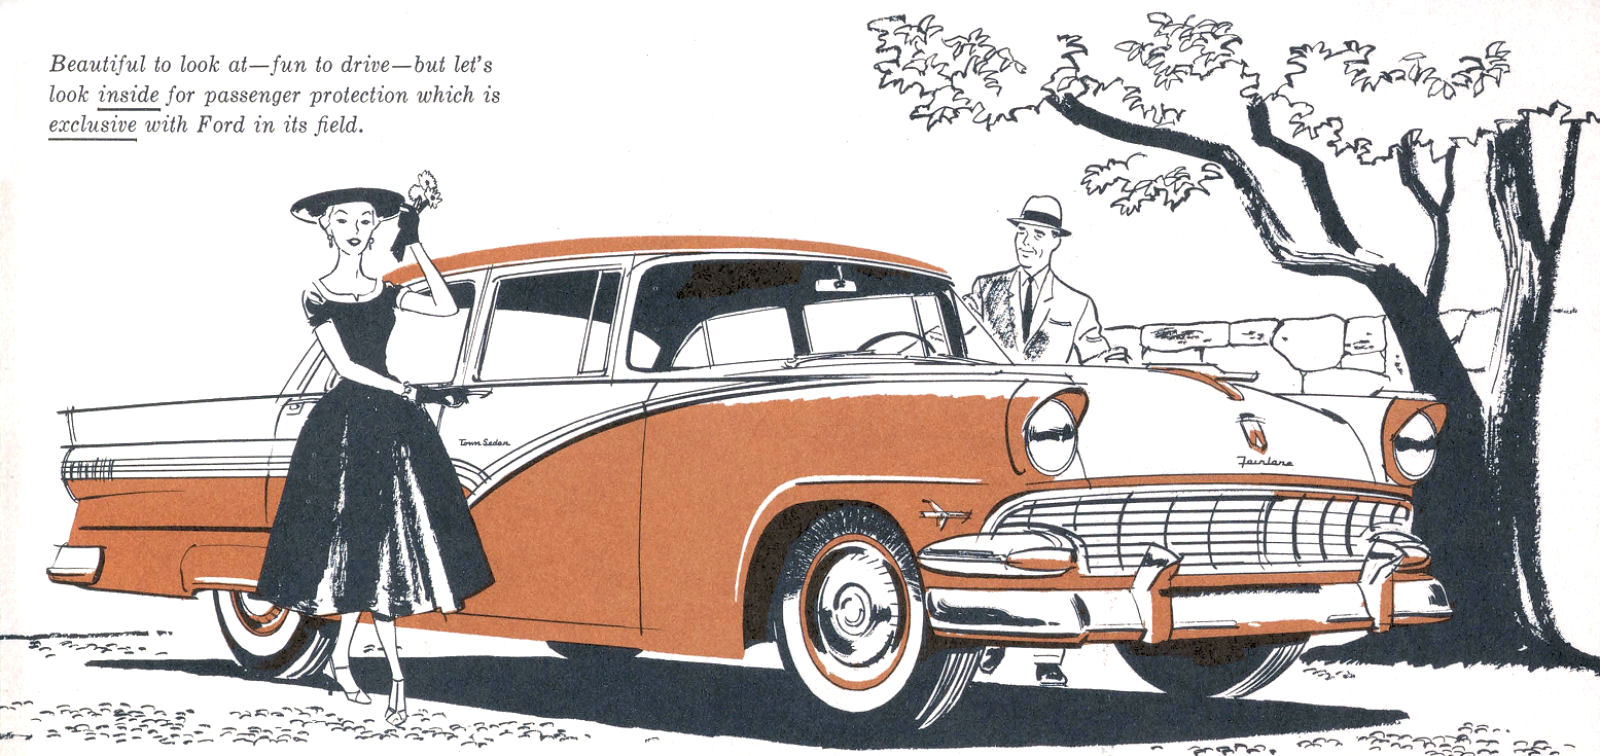 1956 Ford Lifeguard  Design-05